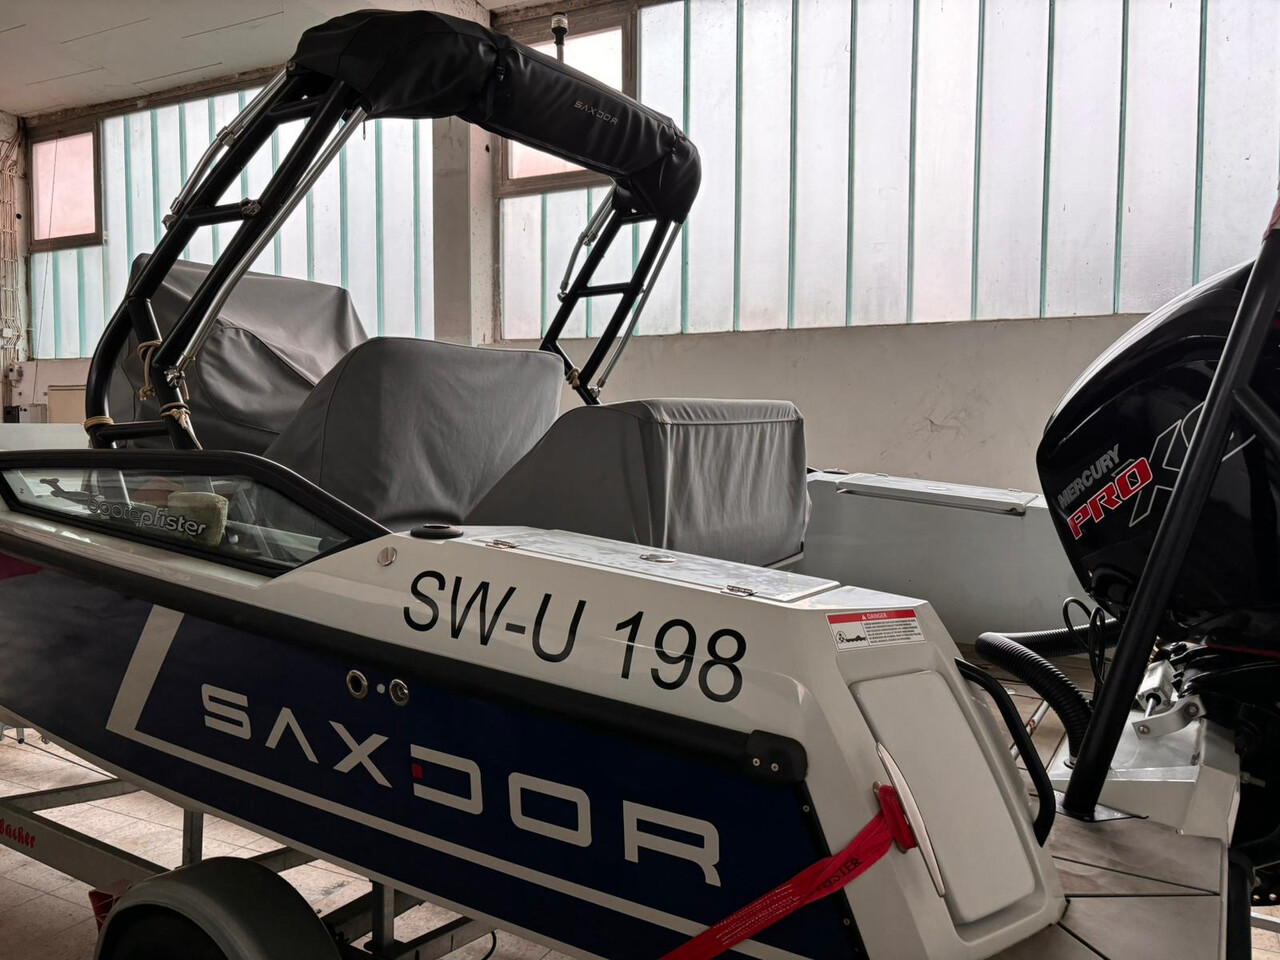 Saxdor 200 (Kommission) - фото 3